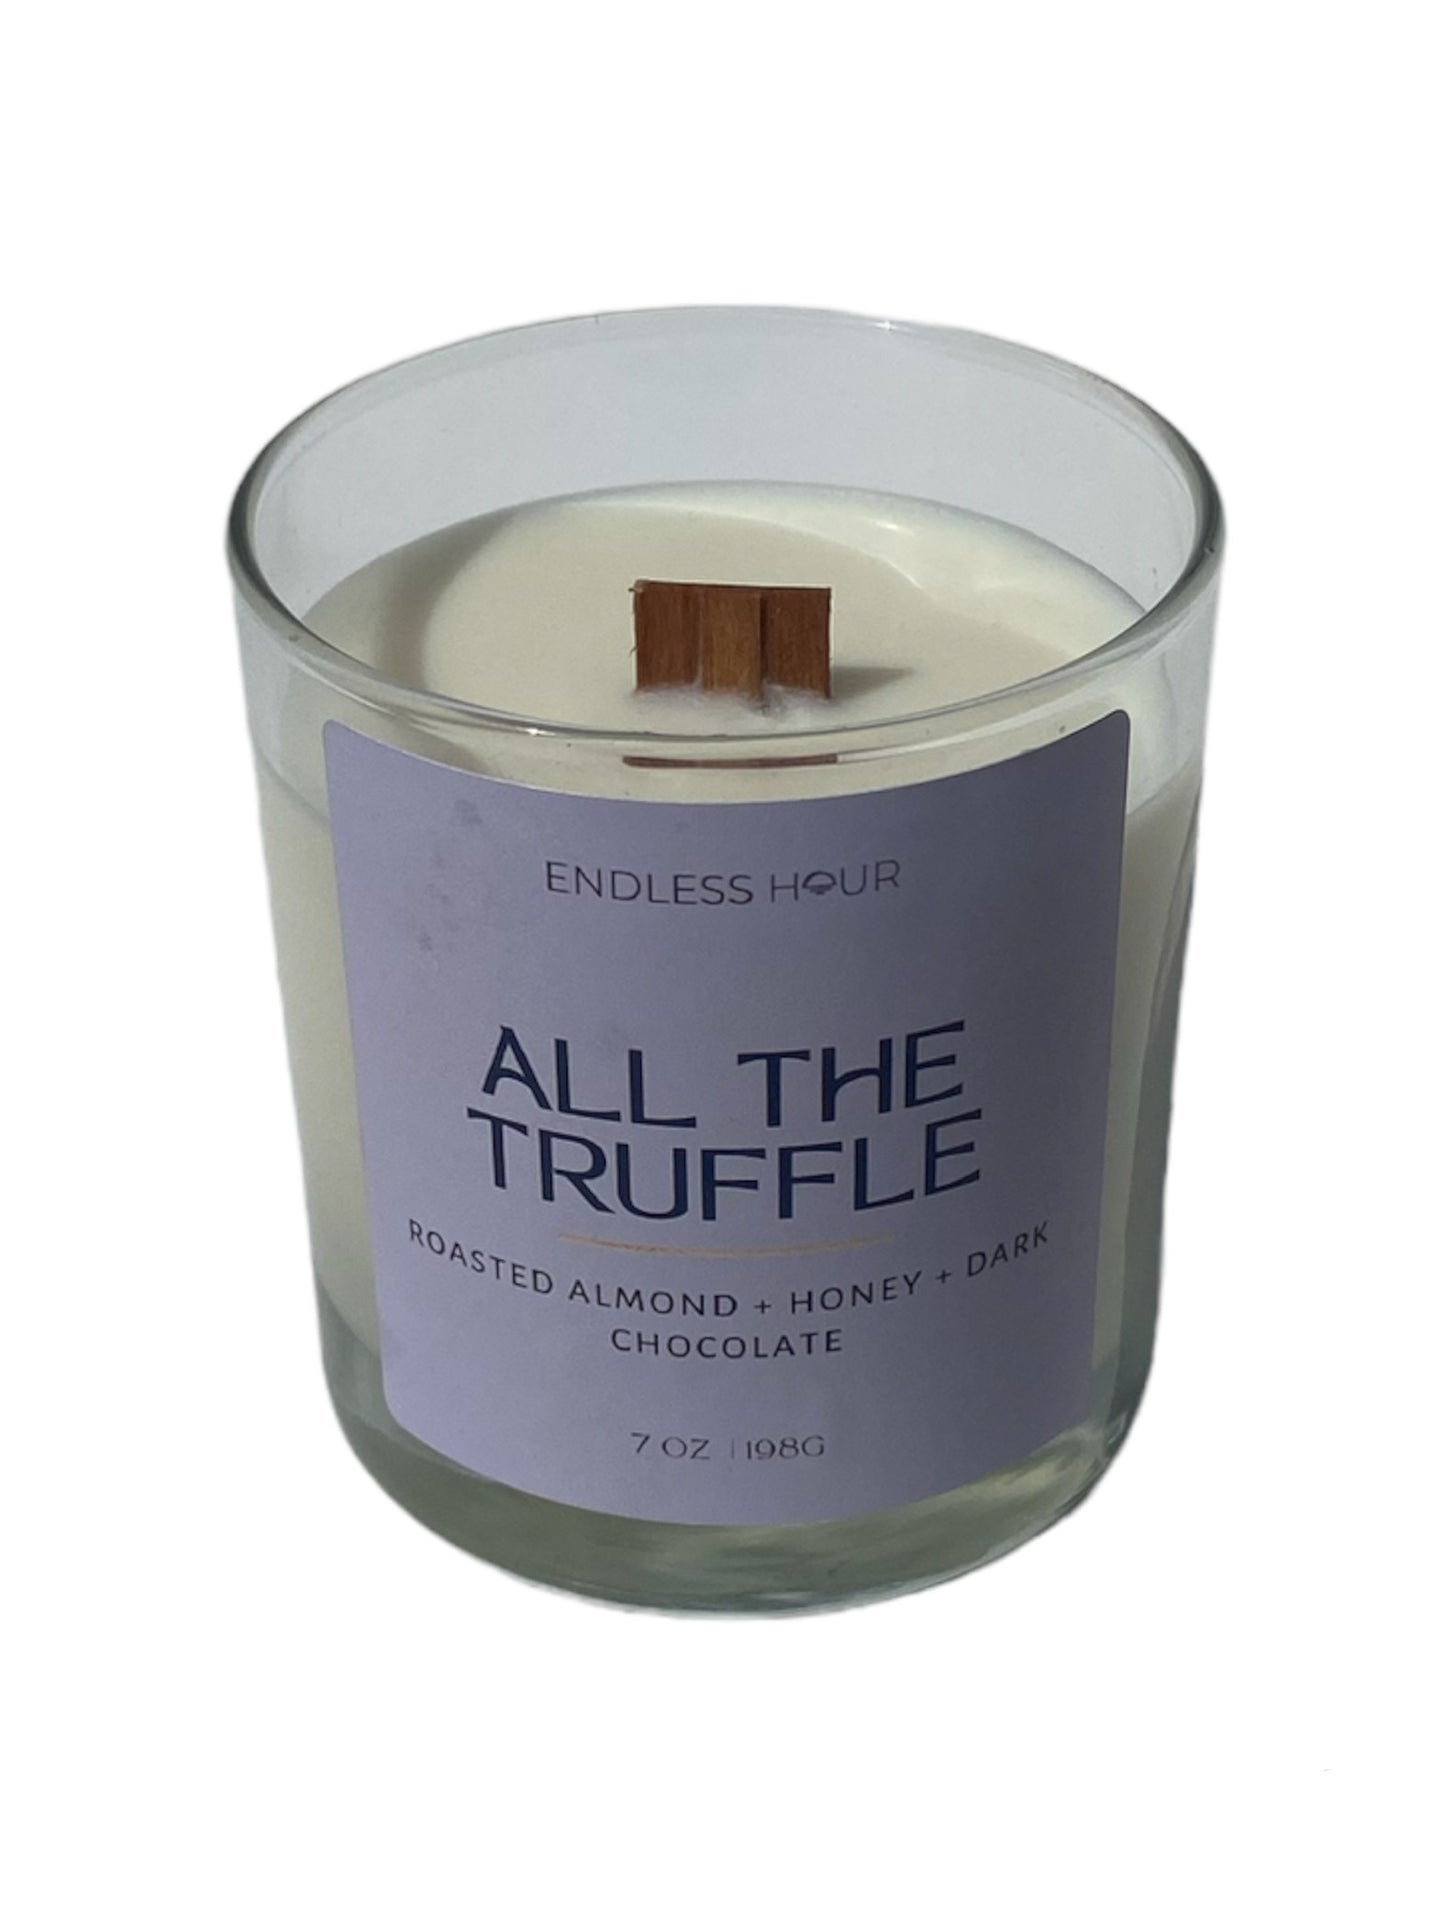 All the Truffle | Roasted Almond + Honey + Dark Chocolate